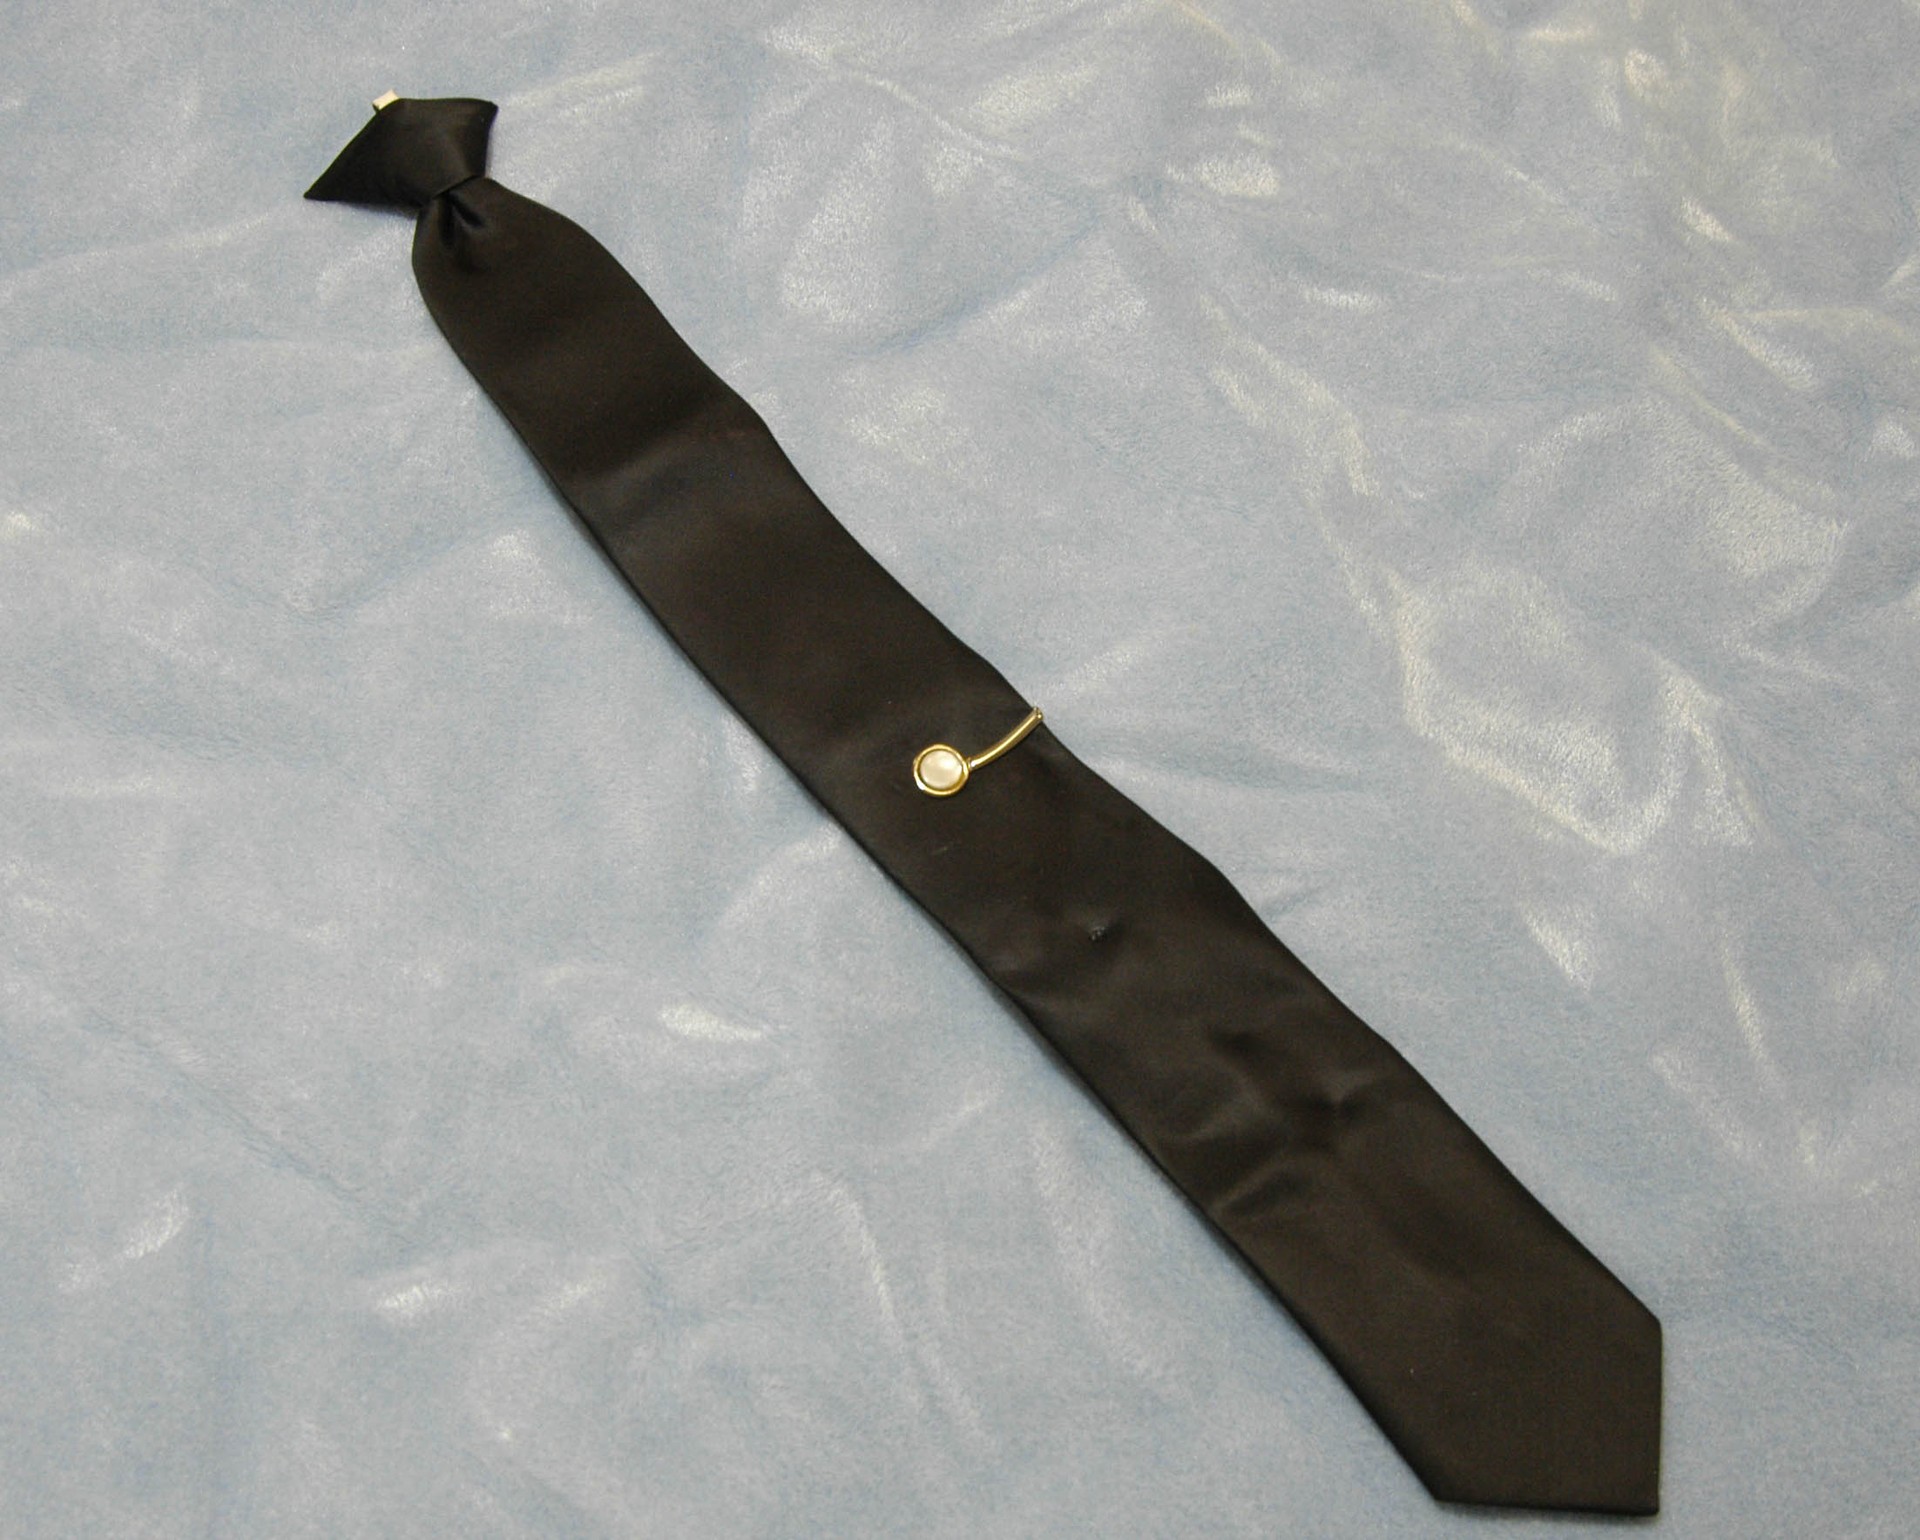 gravata - D.B. Cooper (Foto: FBI)